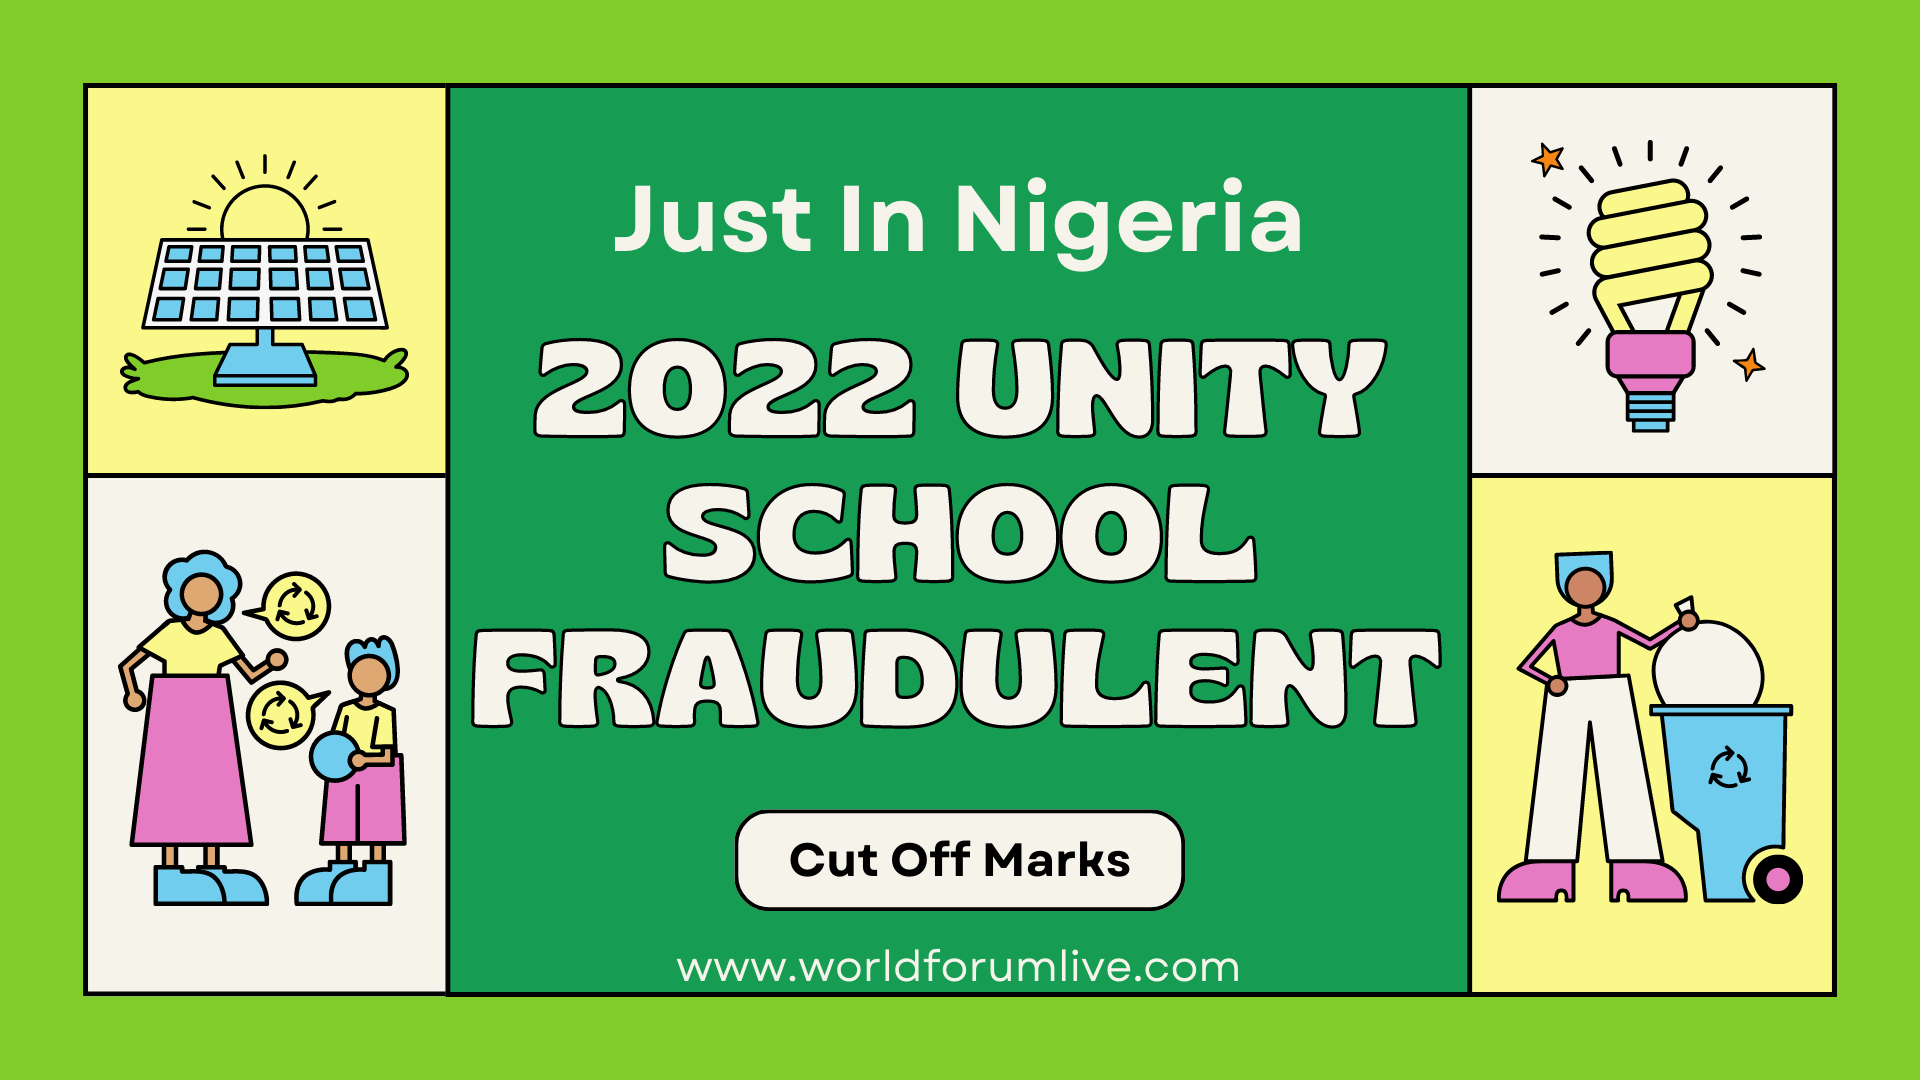 2022 Unity School Cut Off Marks.png